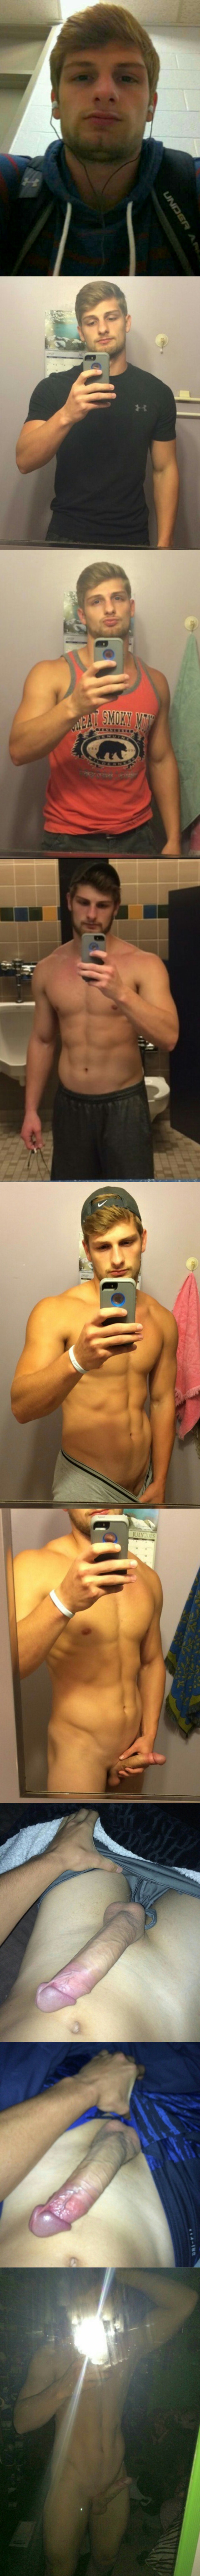 real straight men naked selfies